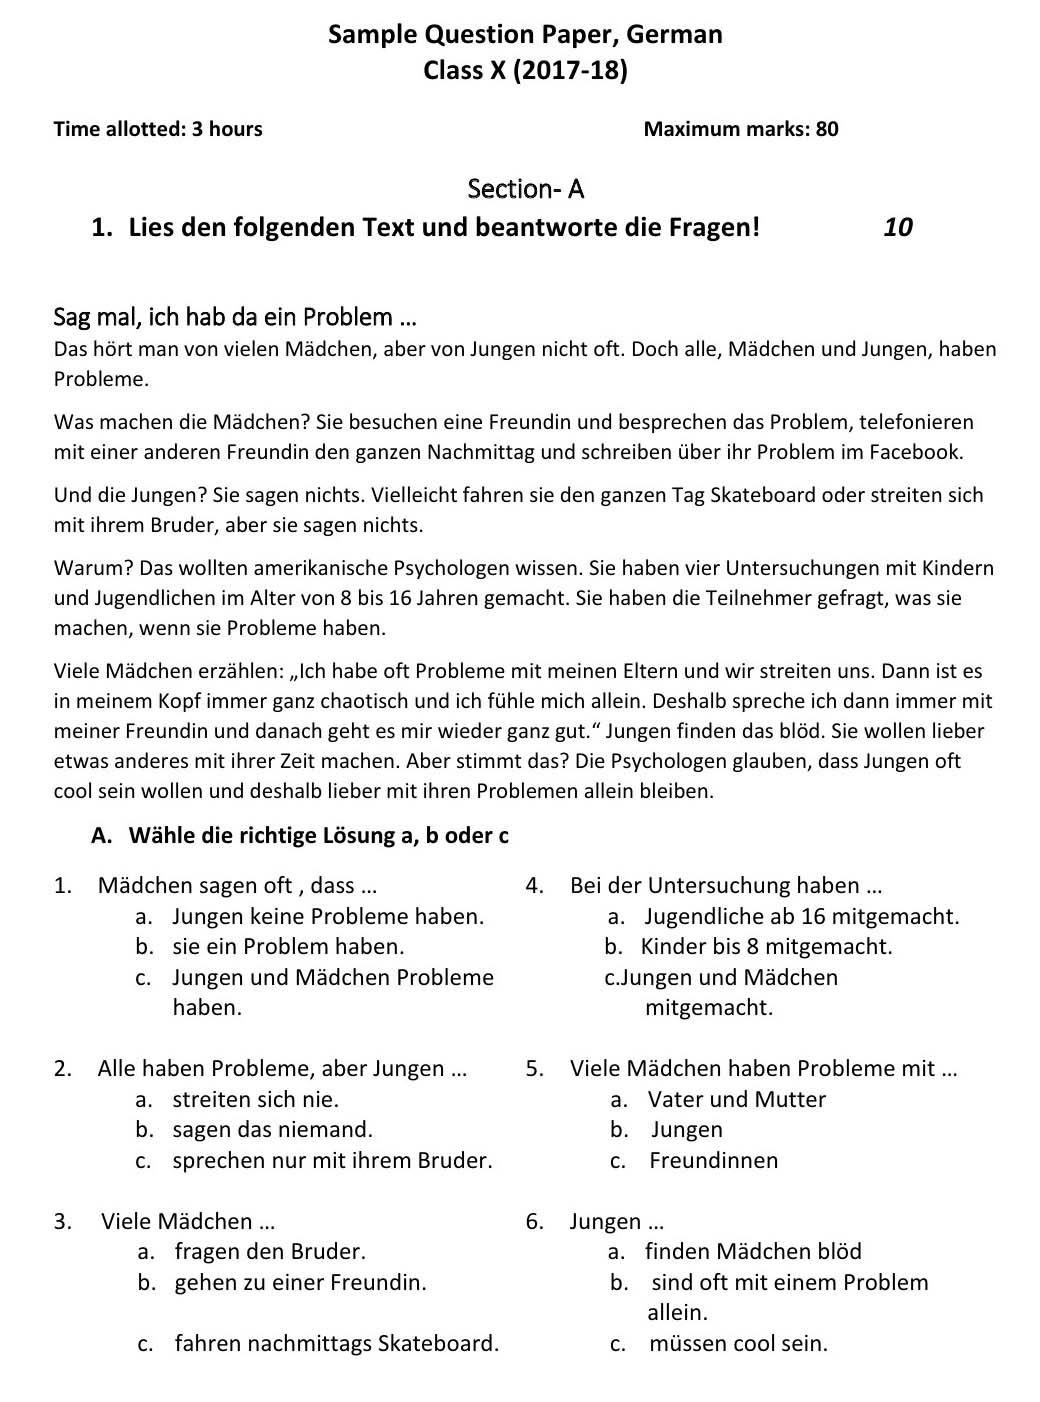 German CBSE Class X Sample Question Paper 2017 18 - Image 1